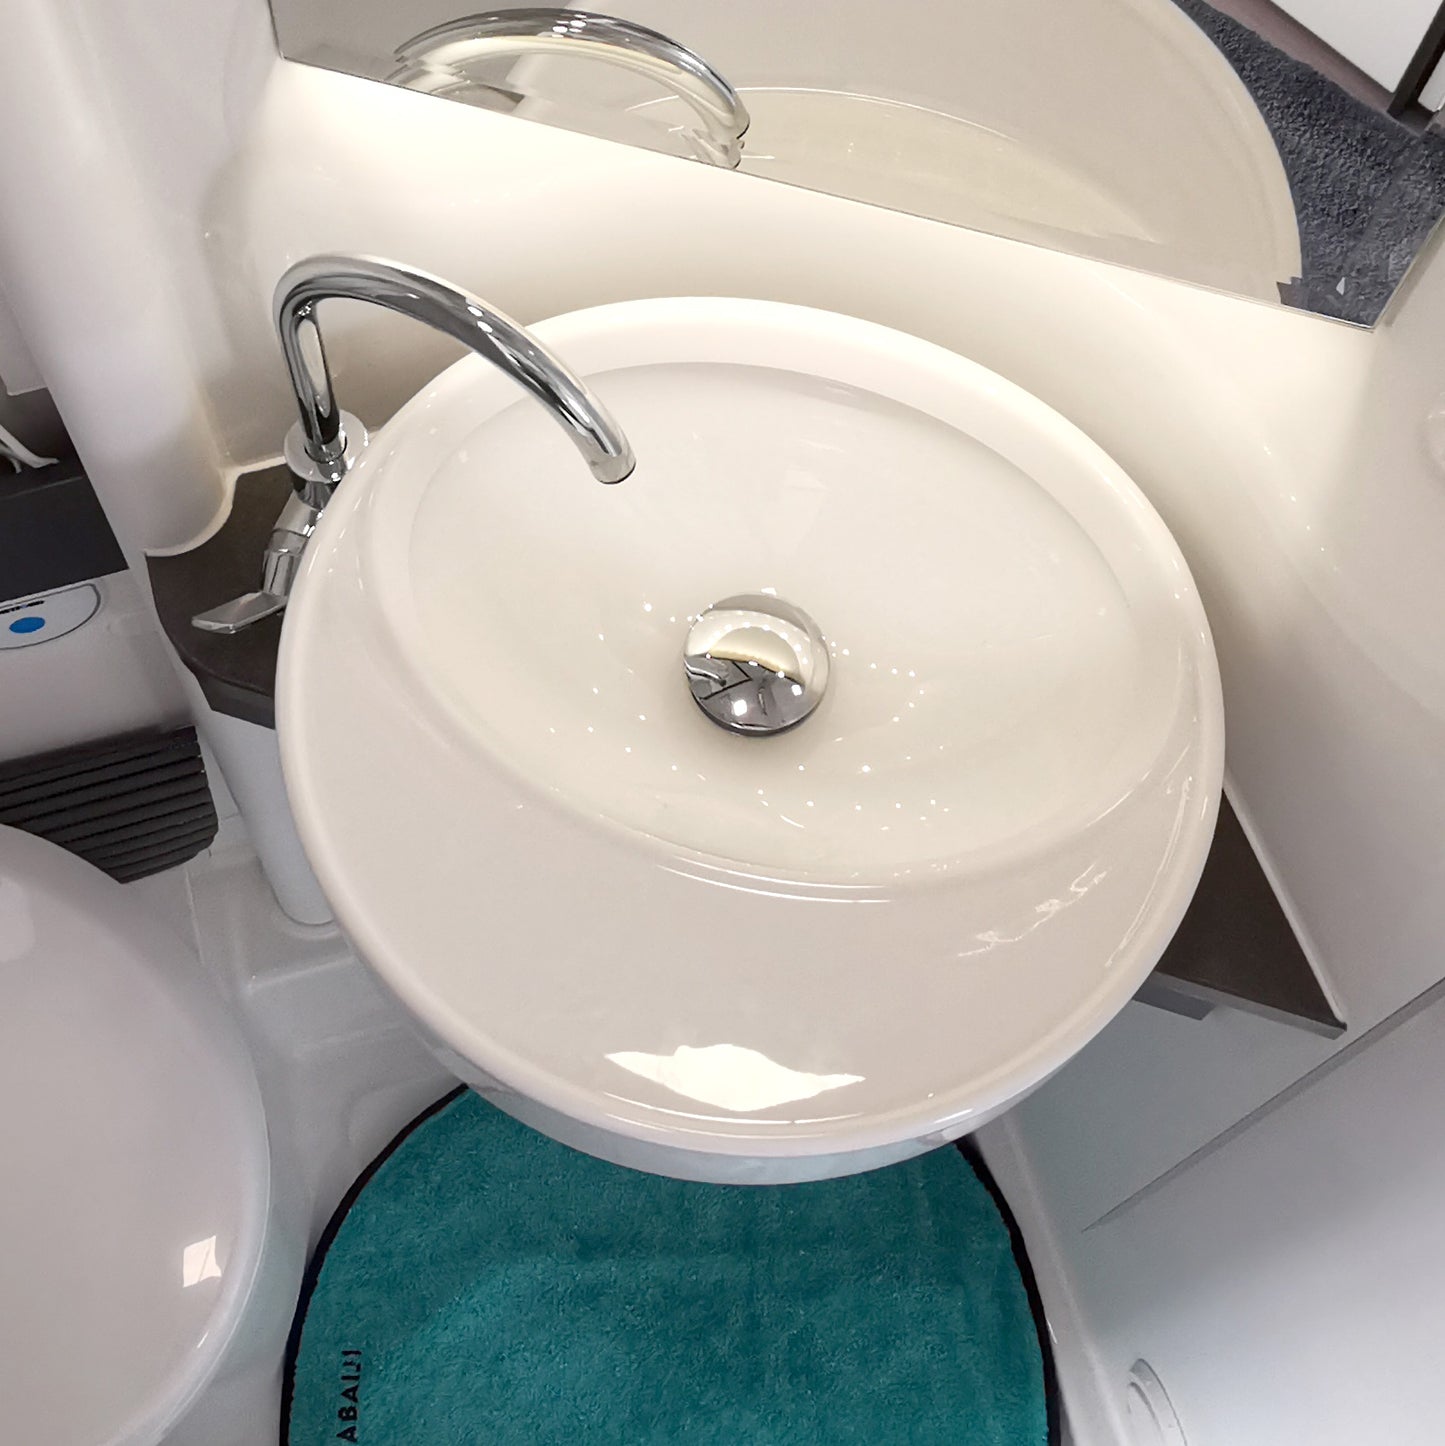 Countertop washbasin for Adria